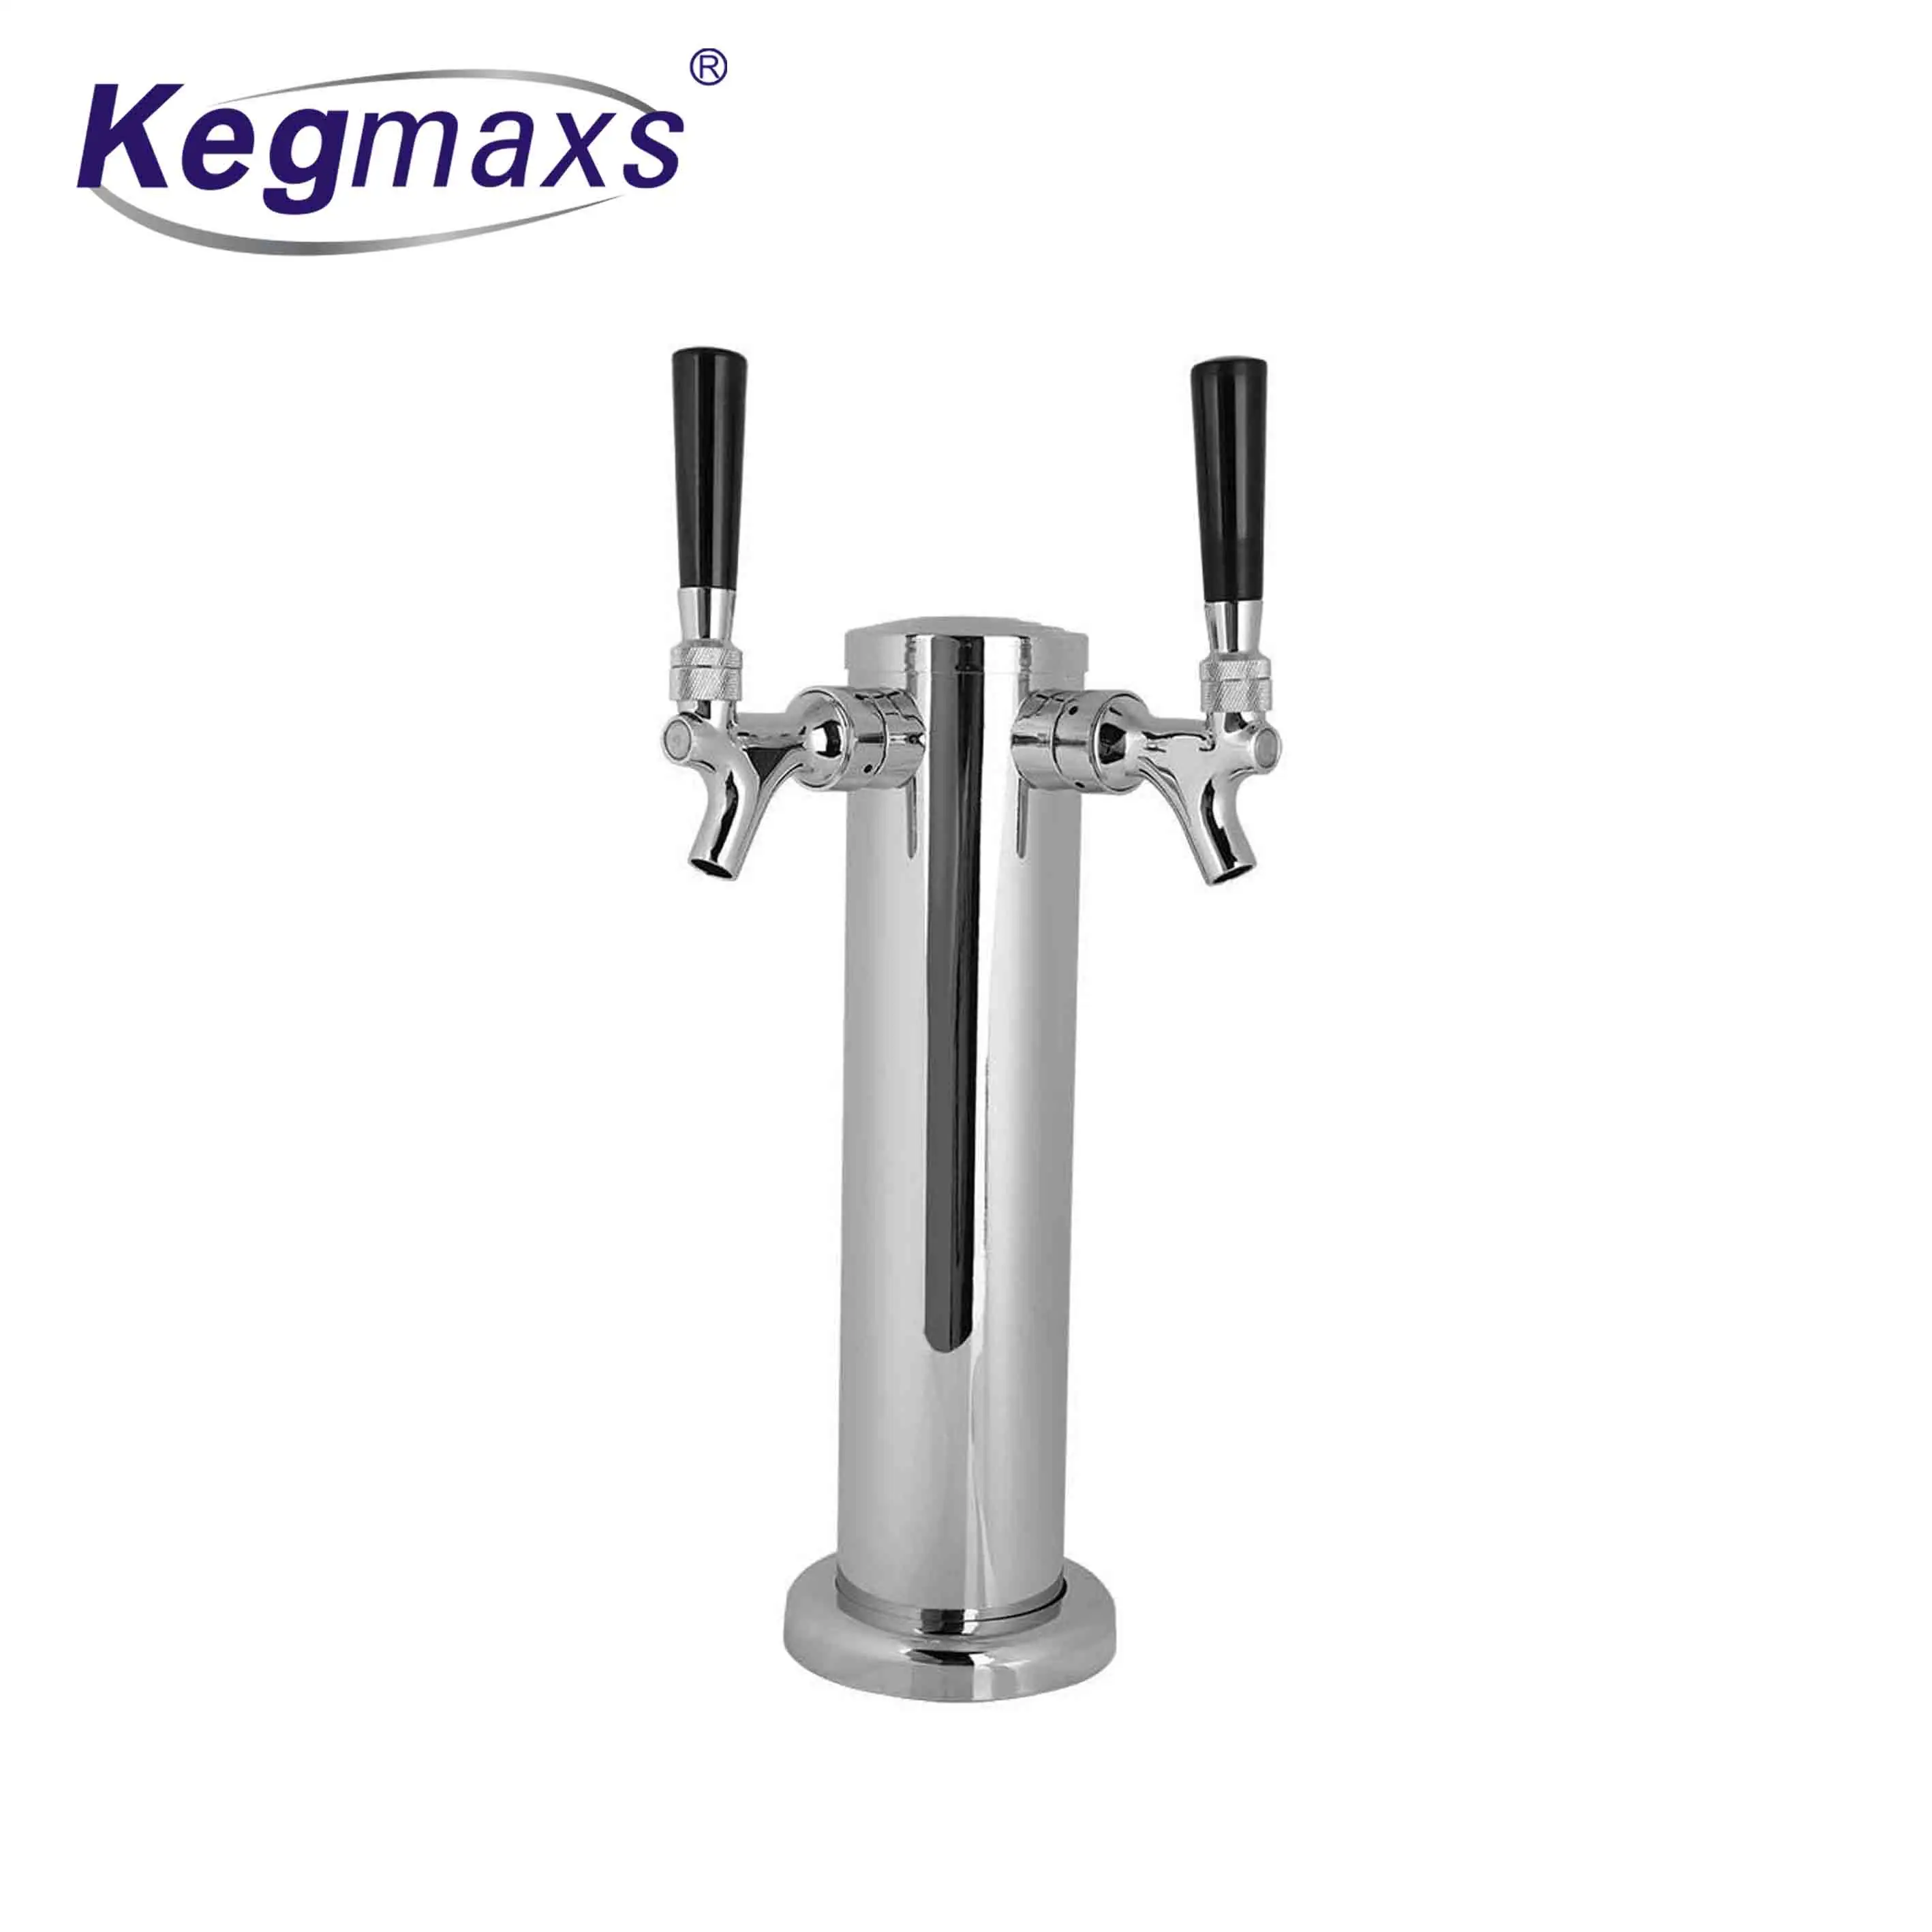 Kegmaxs-dispensador de cerveza de acero inoxidable, torre de barril con grifo, doble grifo, 2 mangueras